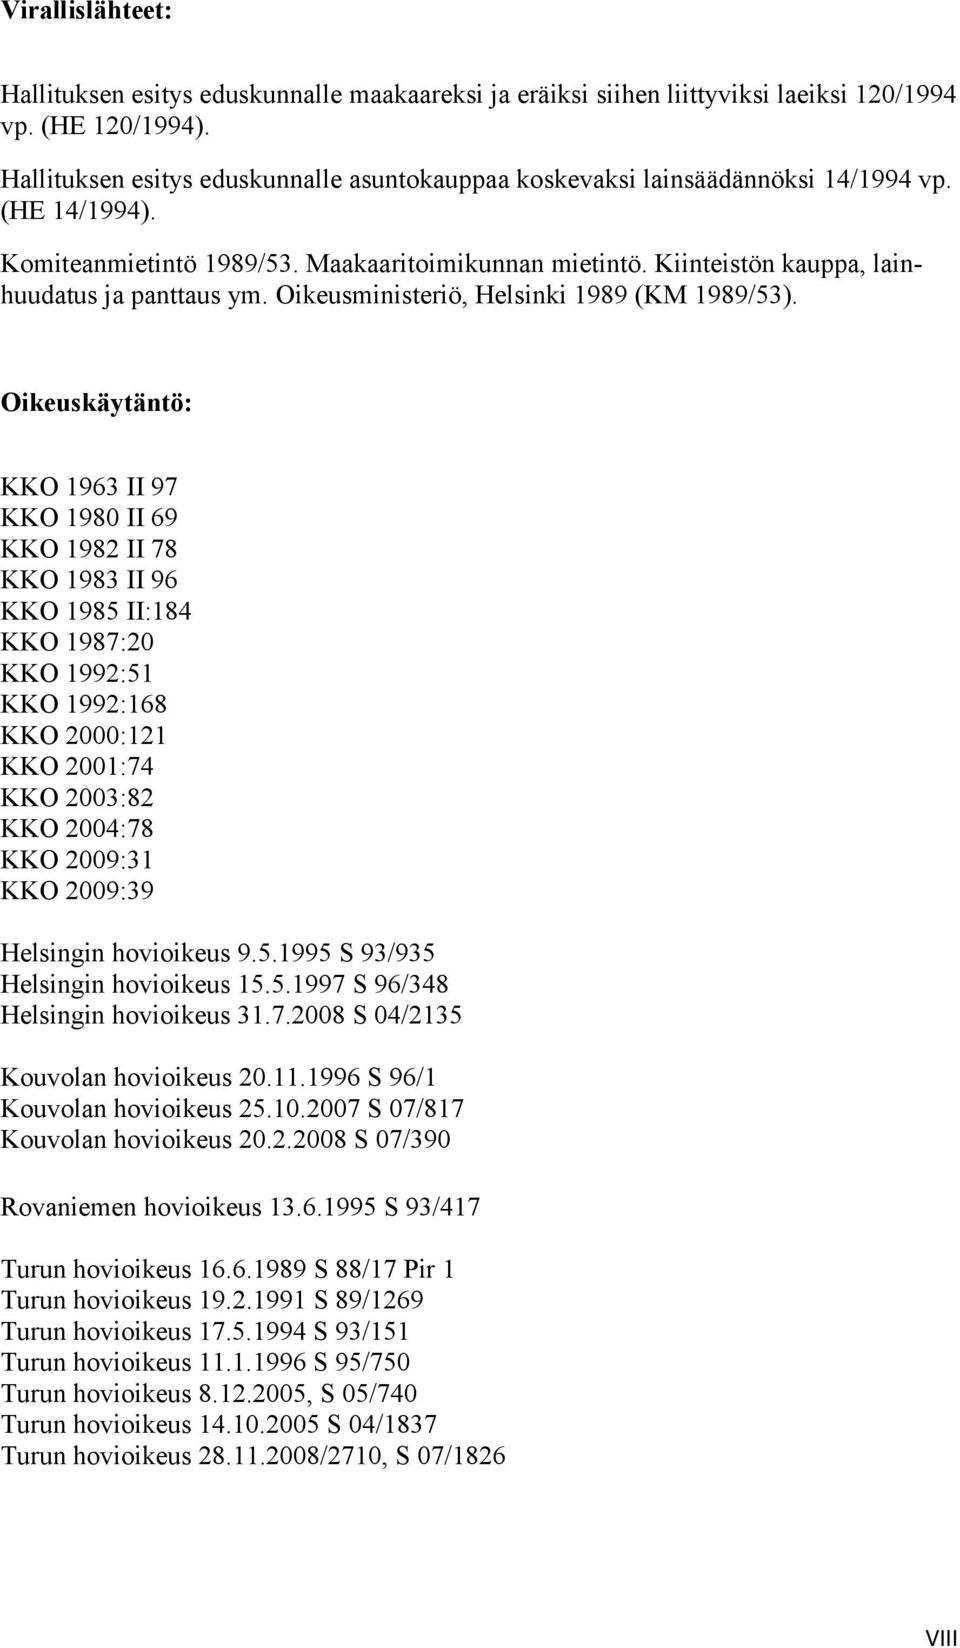 Kiinteistön kauppa, lainhuudatus ja panttaus ym. Oikeusministeriö, Helsinki 1989 (KM 1989/53).